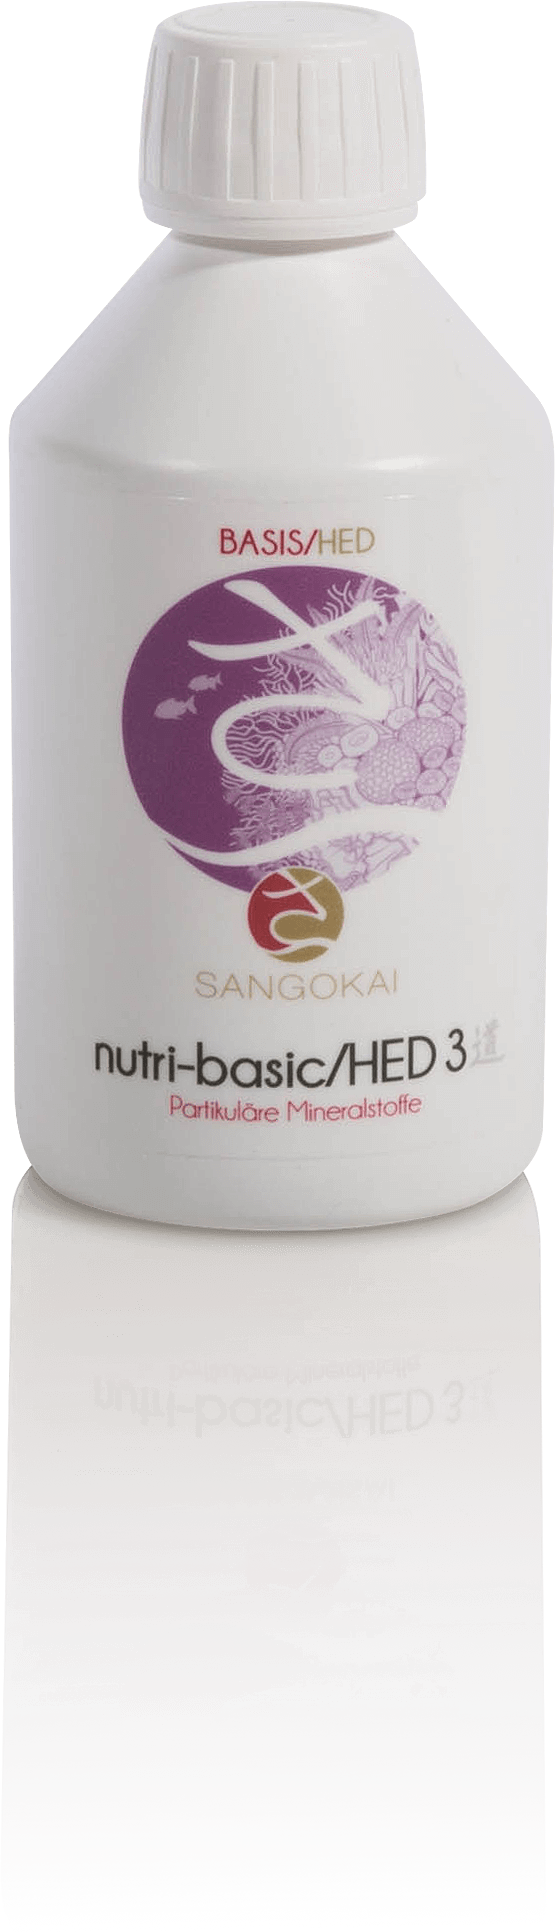 Sango nutri-basic/ HED  # 3  500 ml Sangokai